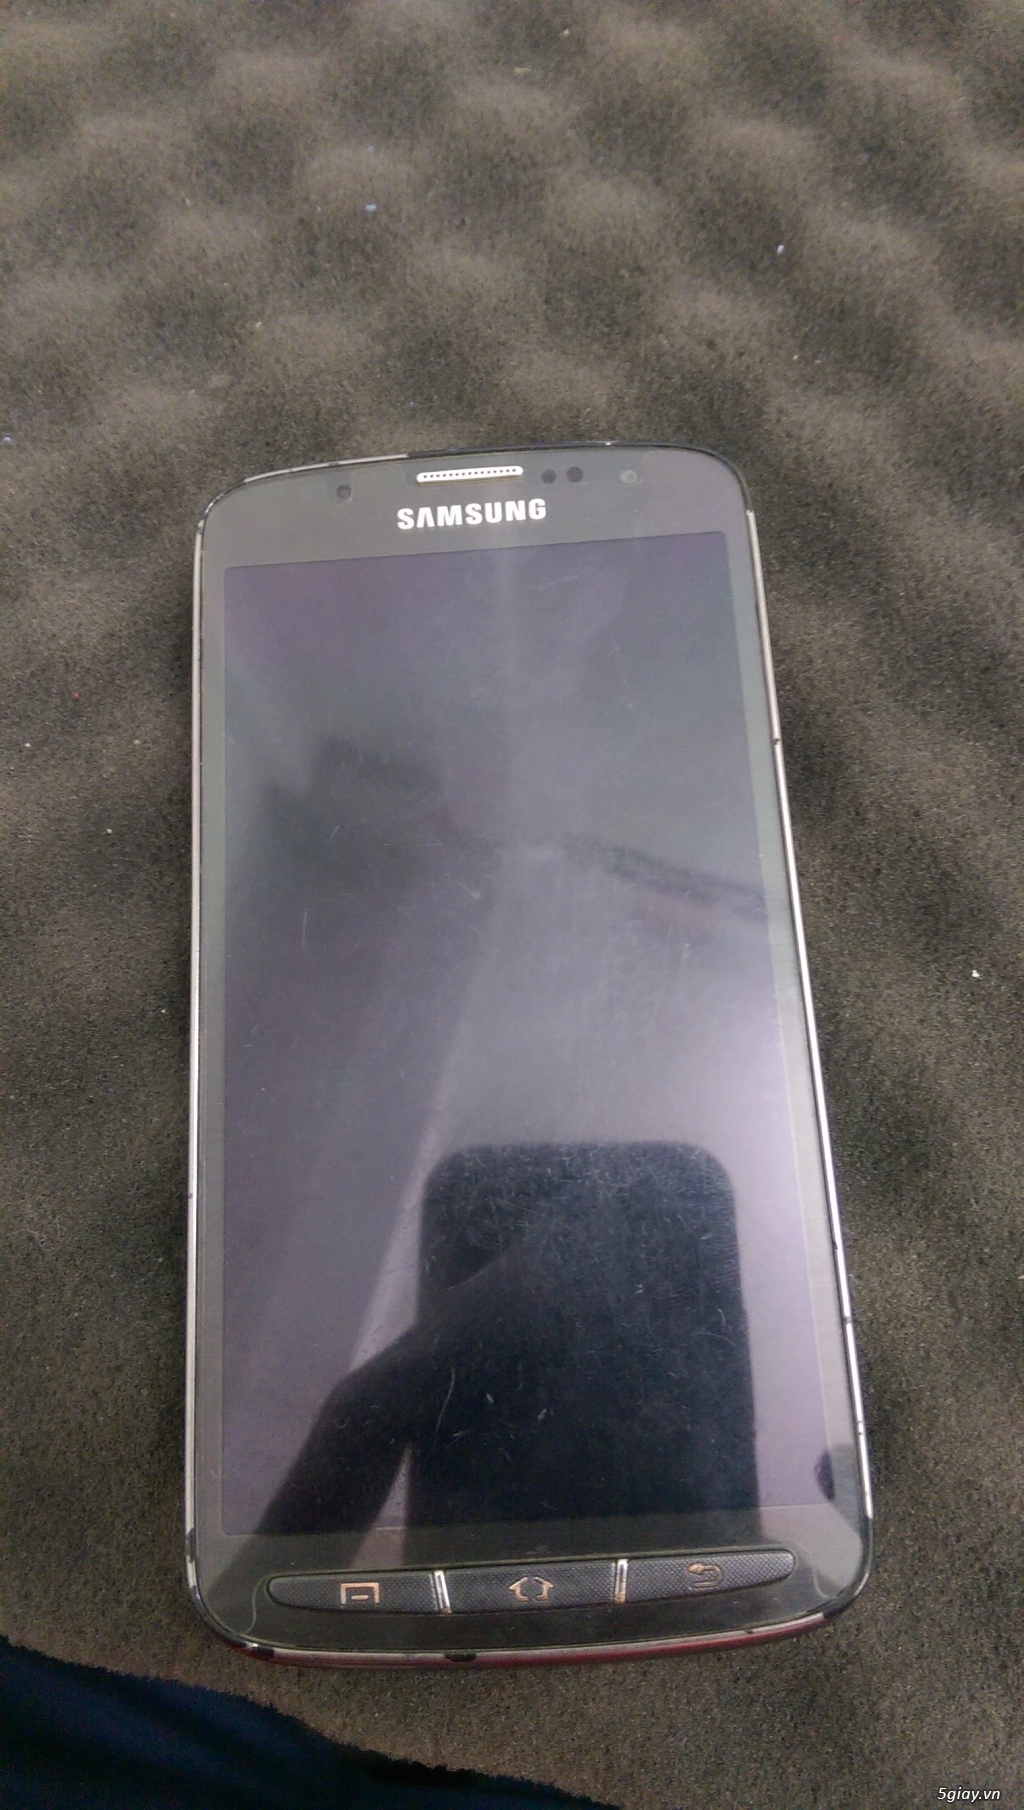 Samsung s4 active - 2